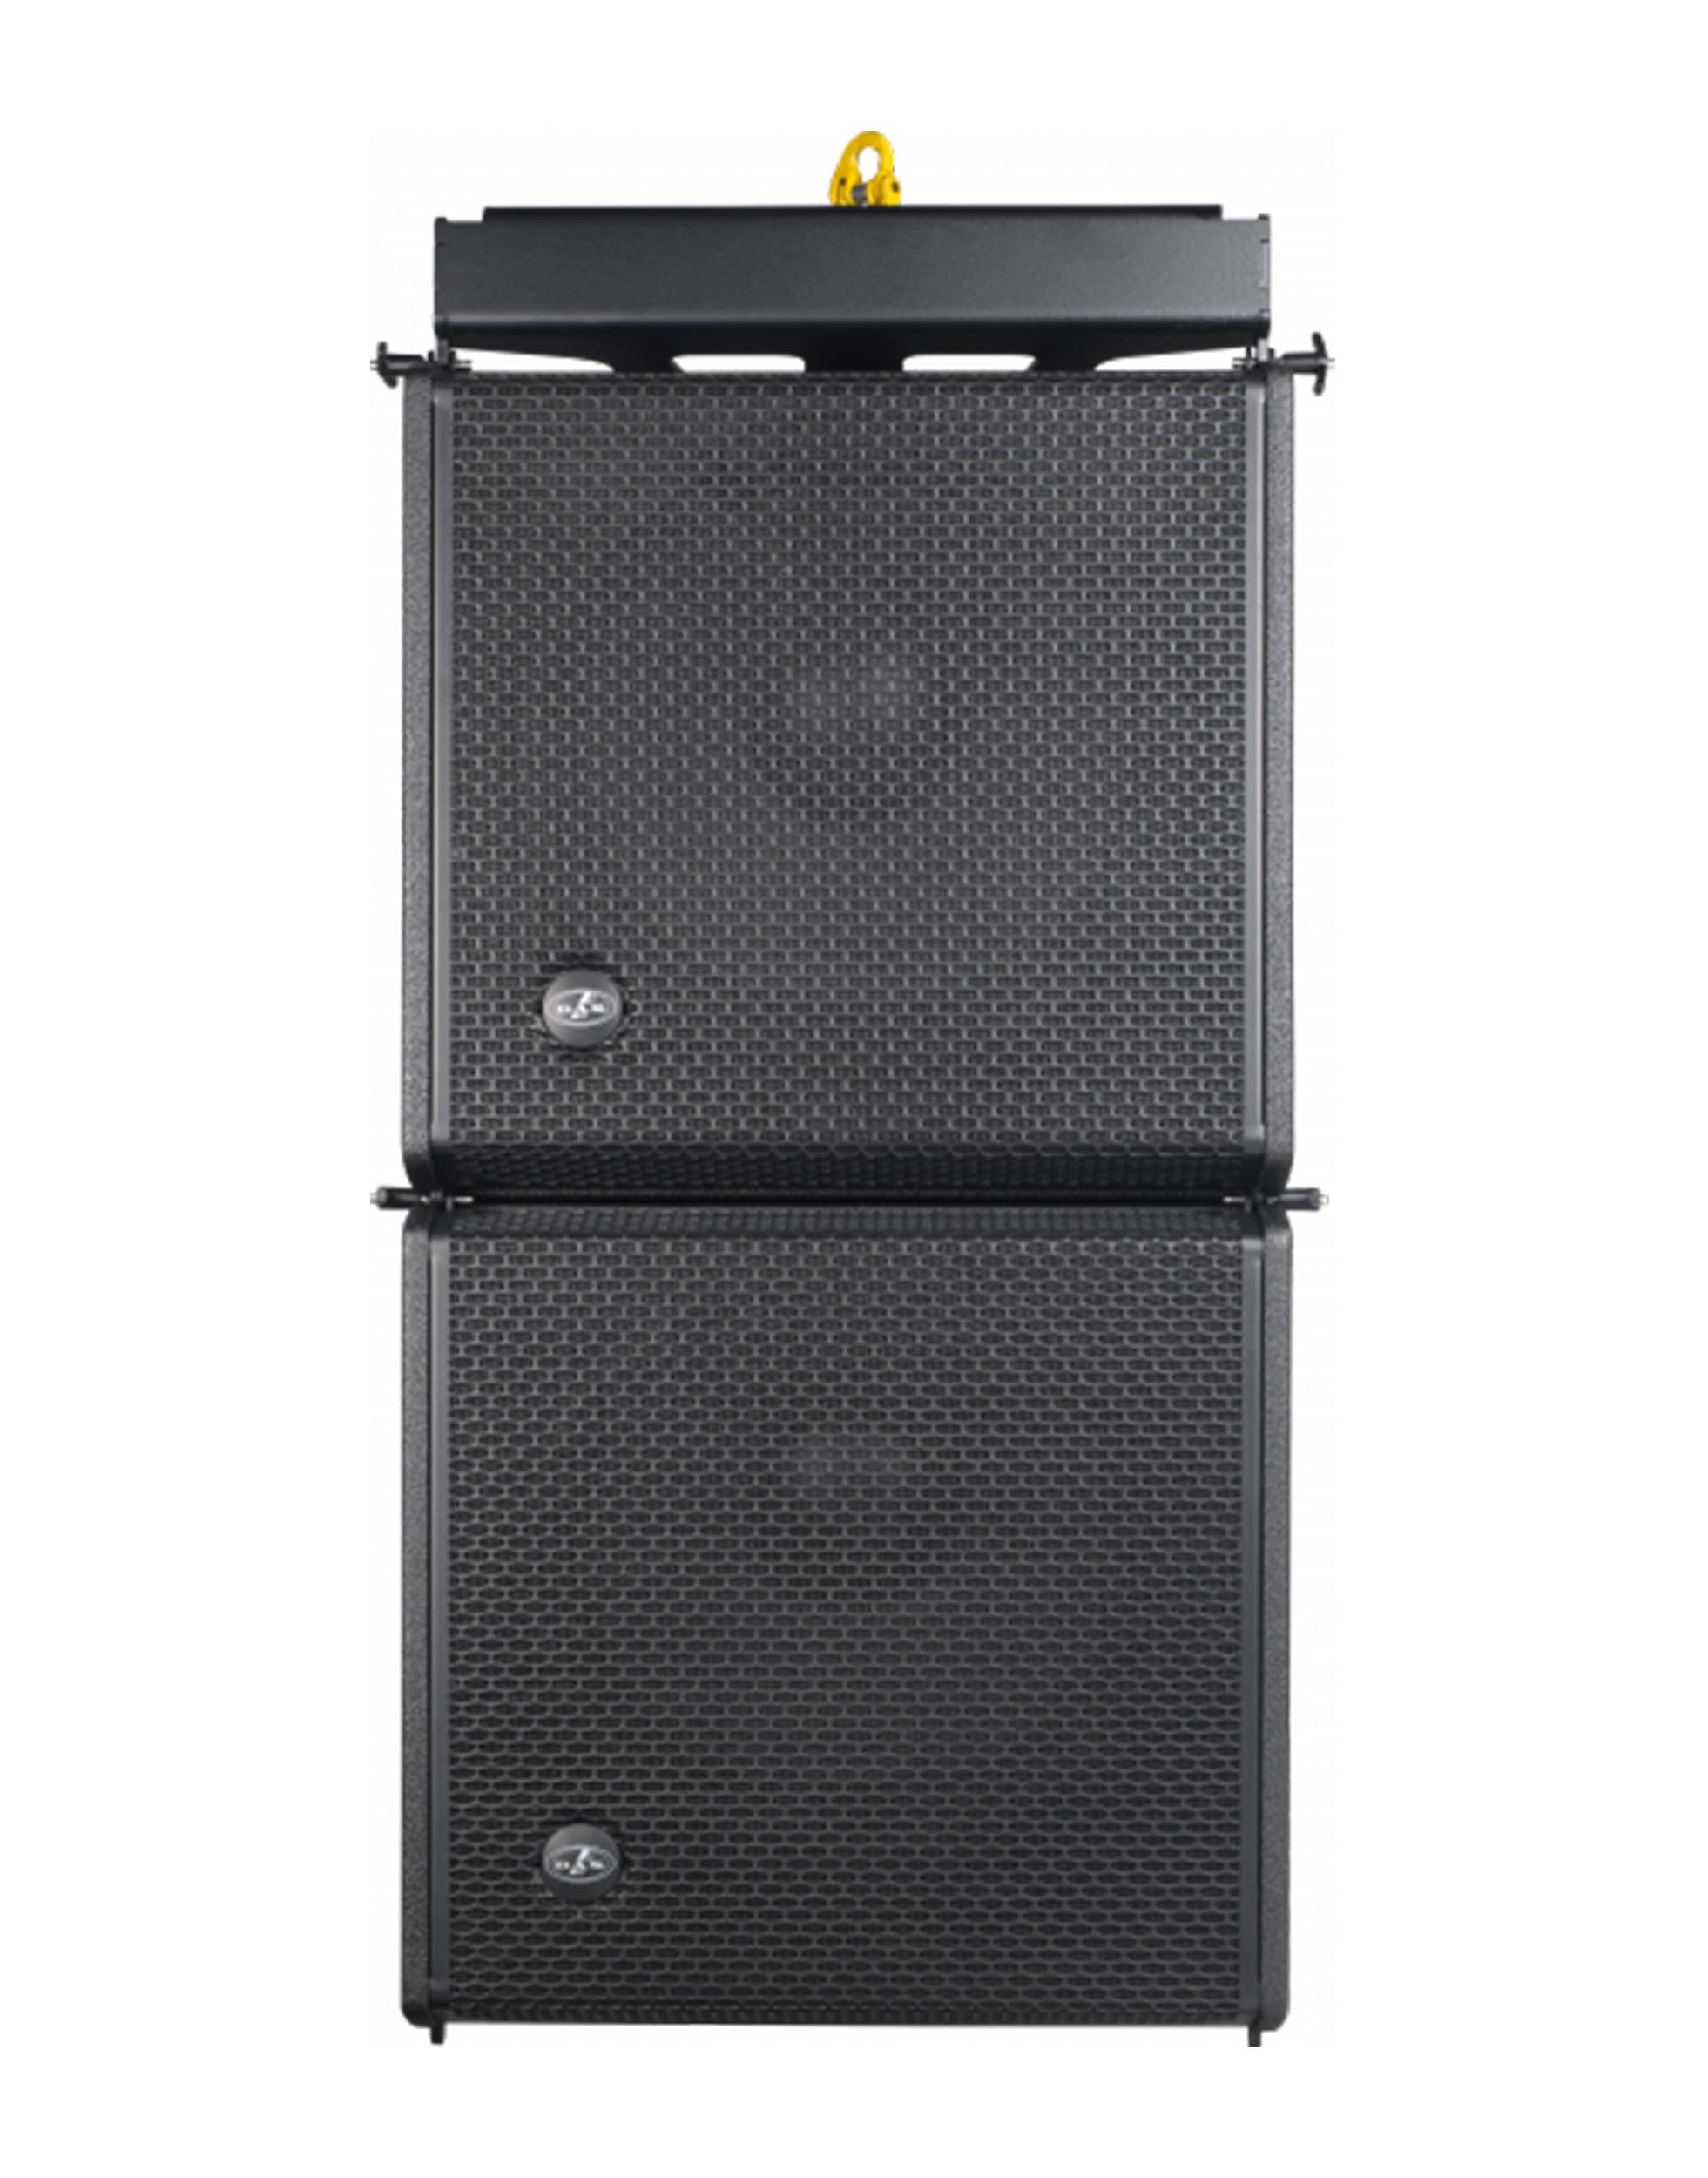 DAS Audio EVENT-115A, Powered 15-Inch Bass Reflex Subwoofer System - Black by DAS Audio